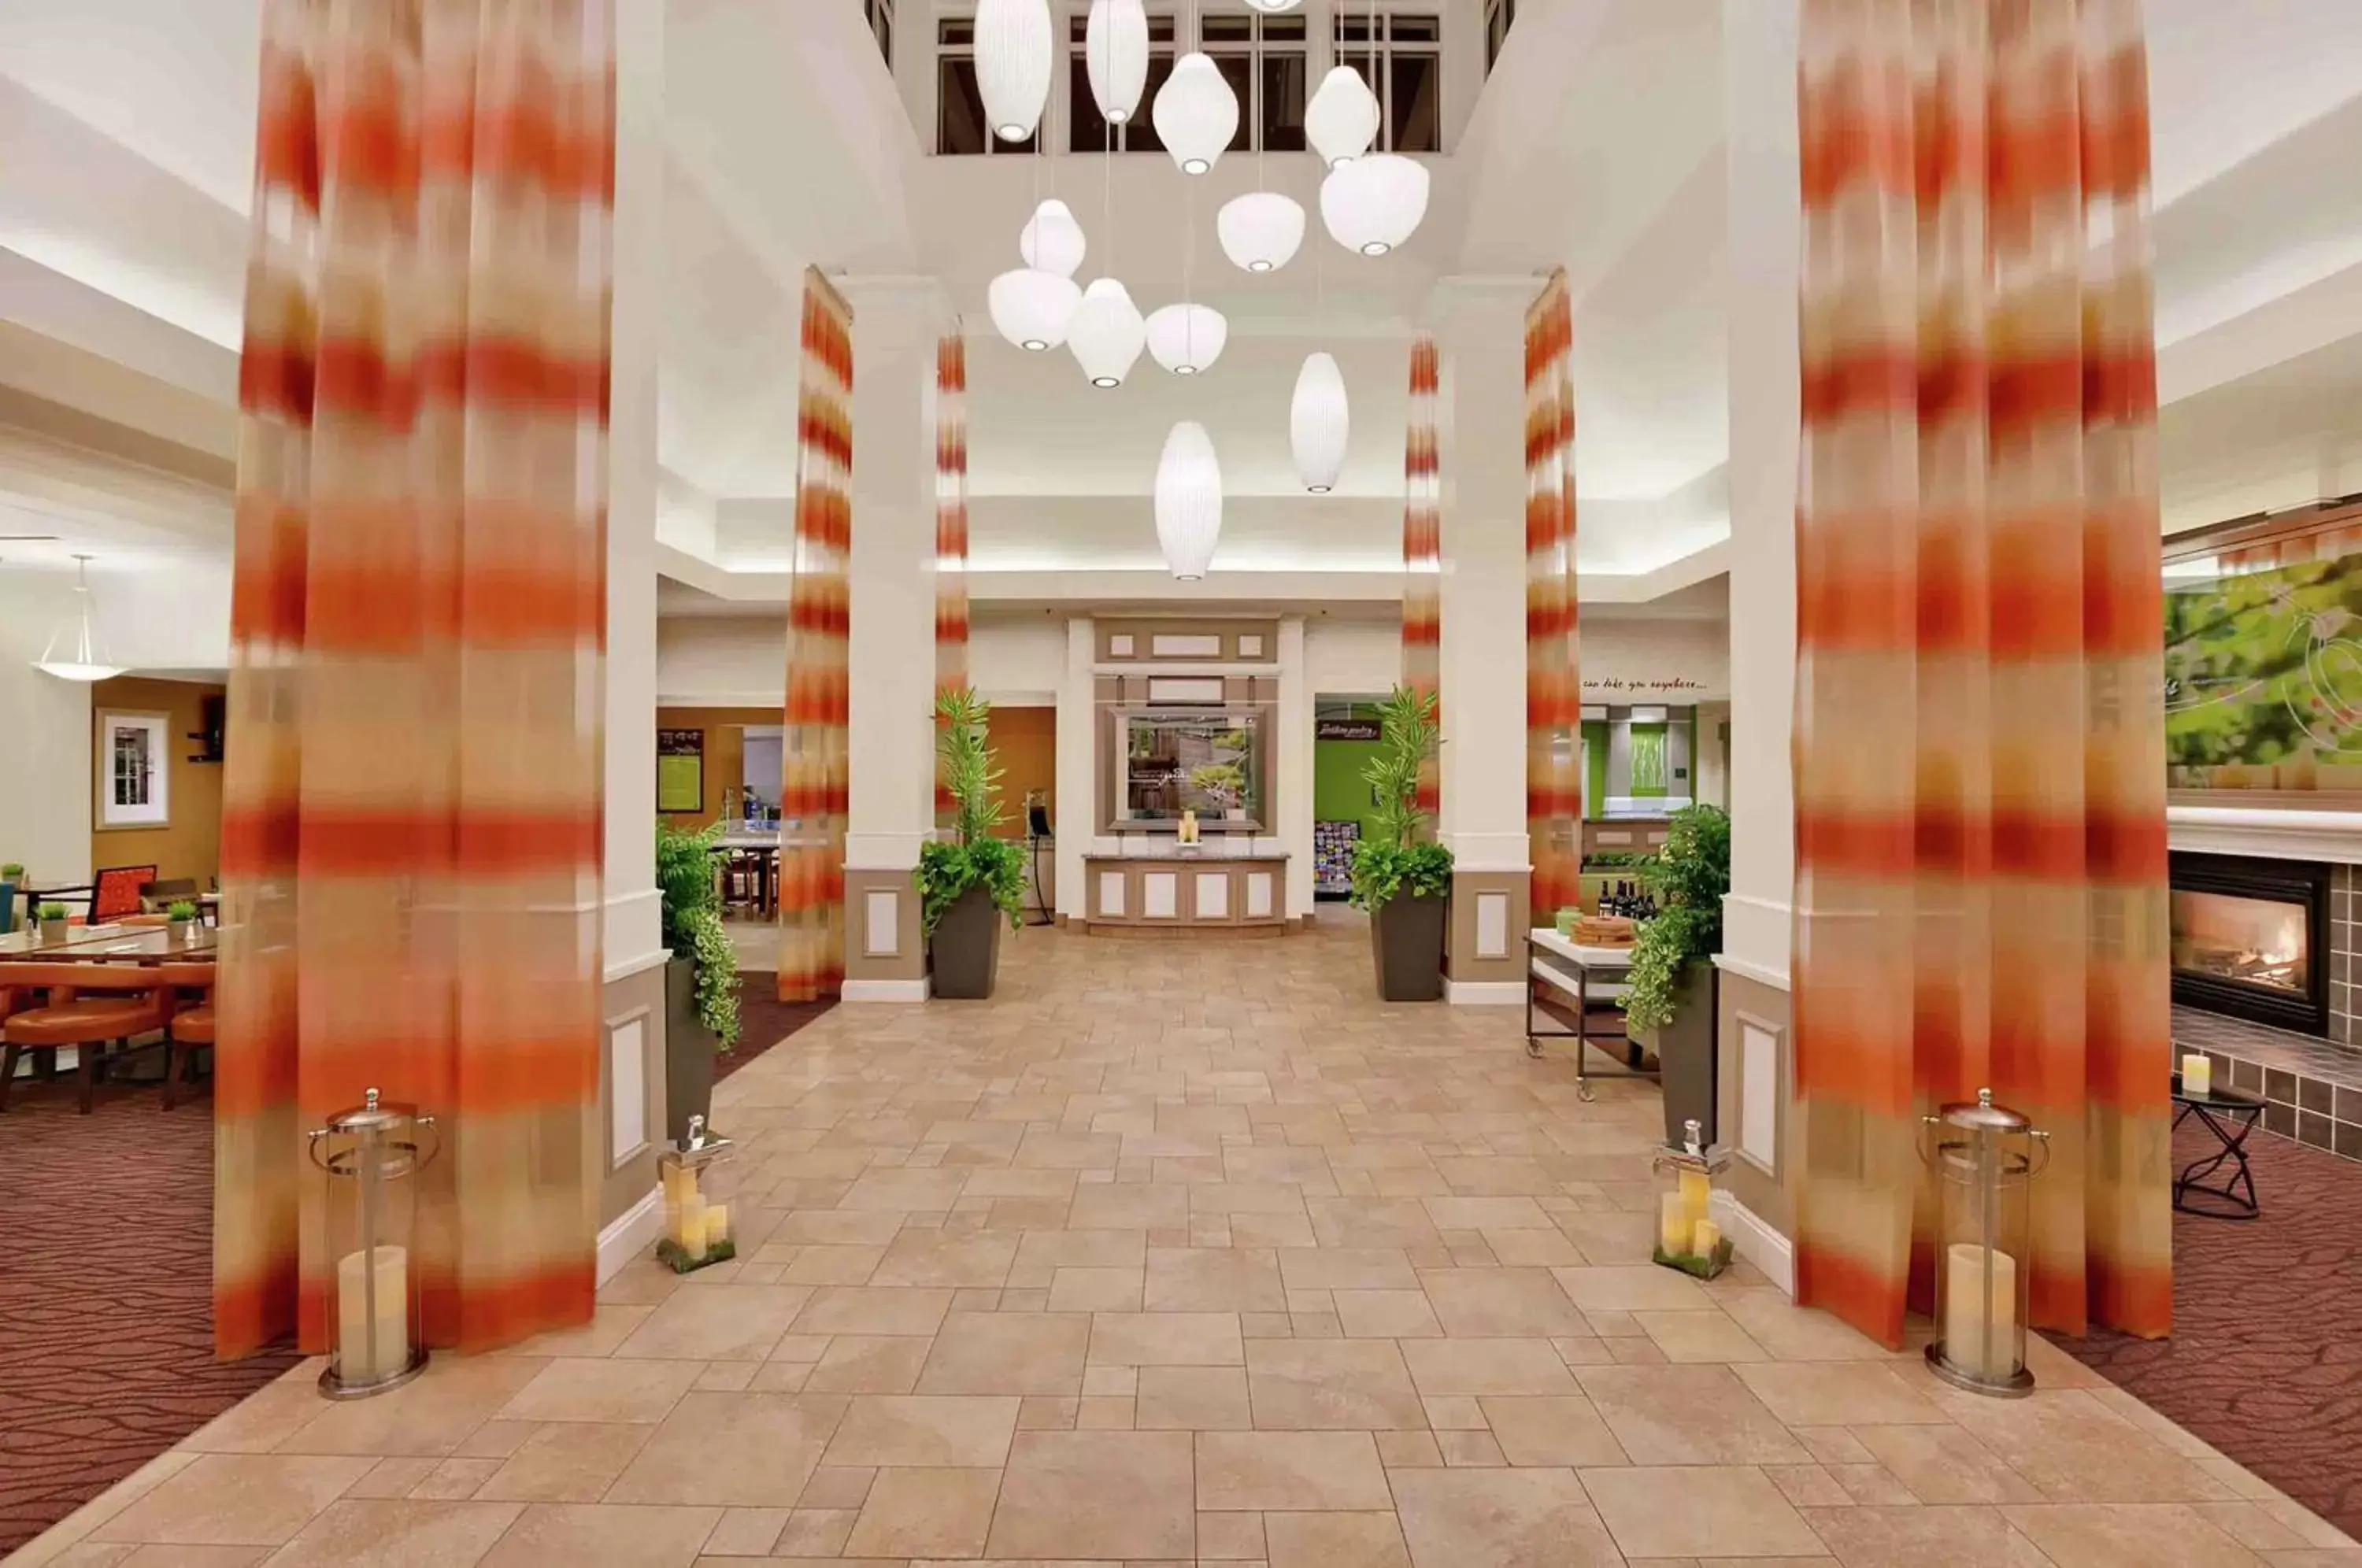 Lobby or reception in Hilton Garden Inn San Francisco Airport North